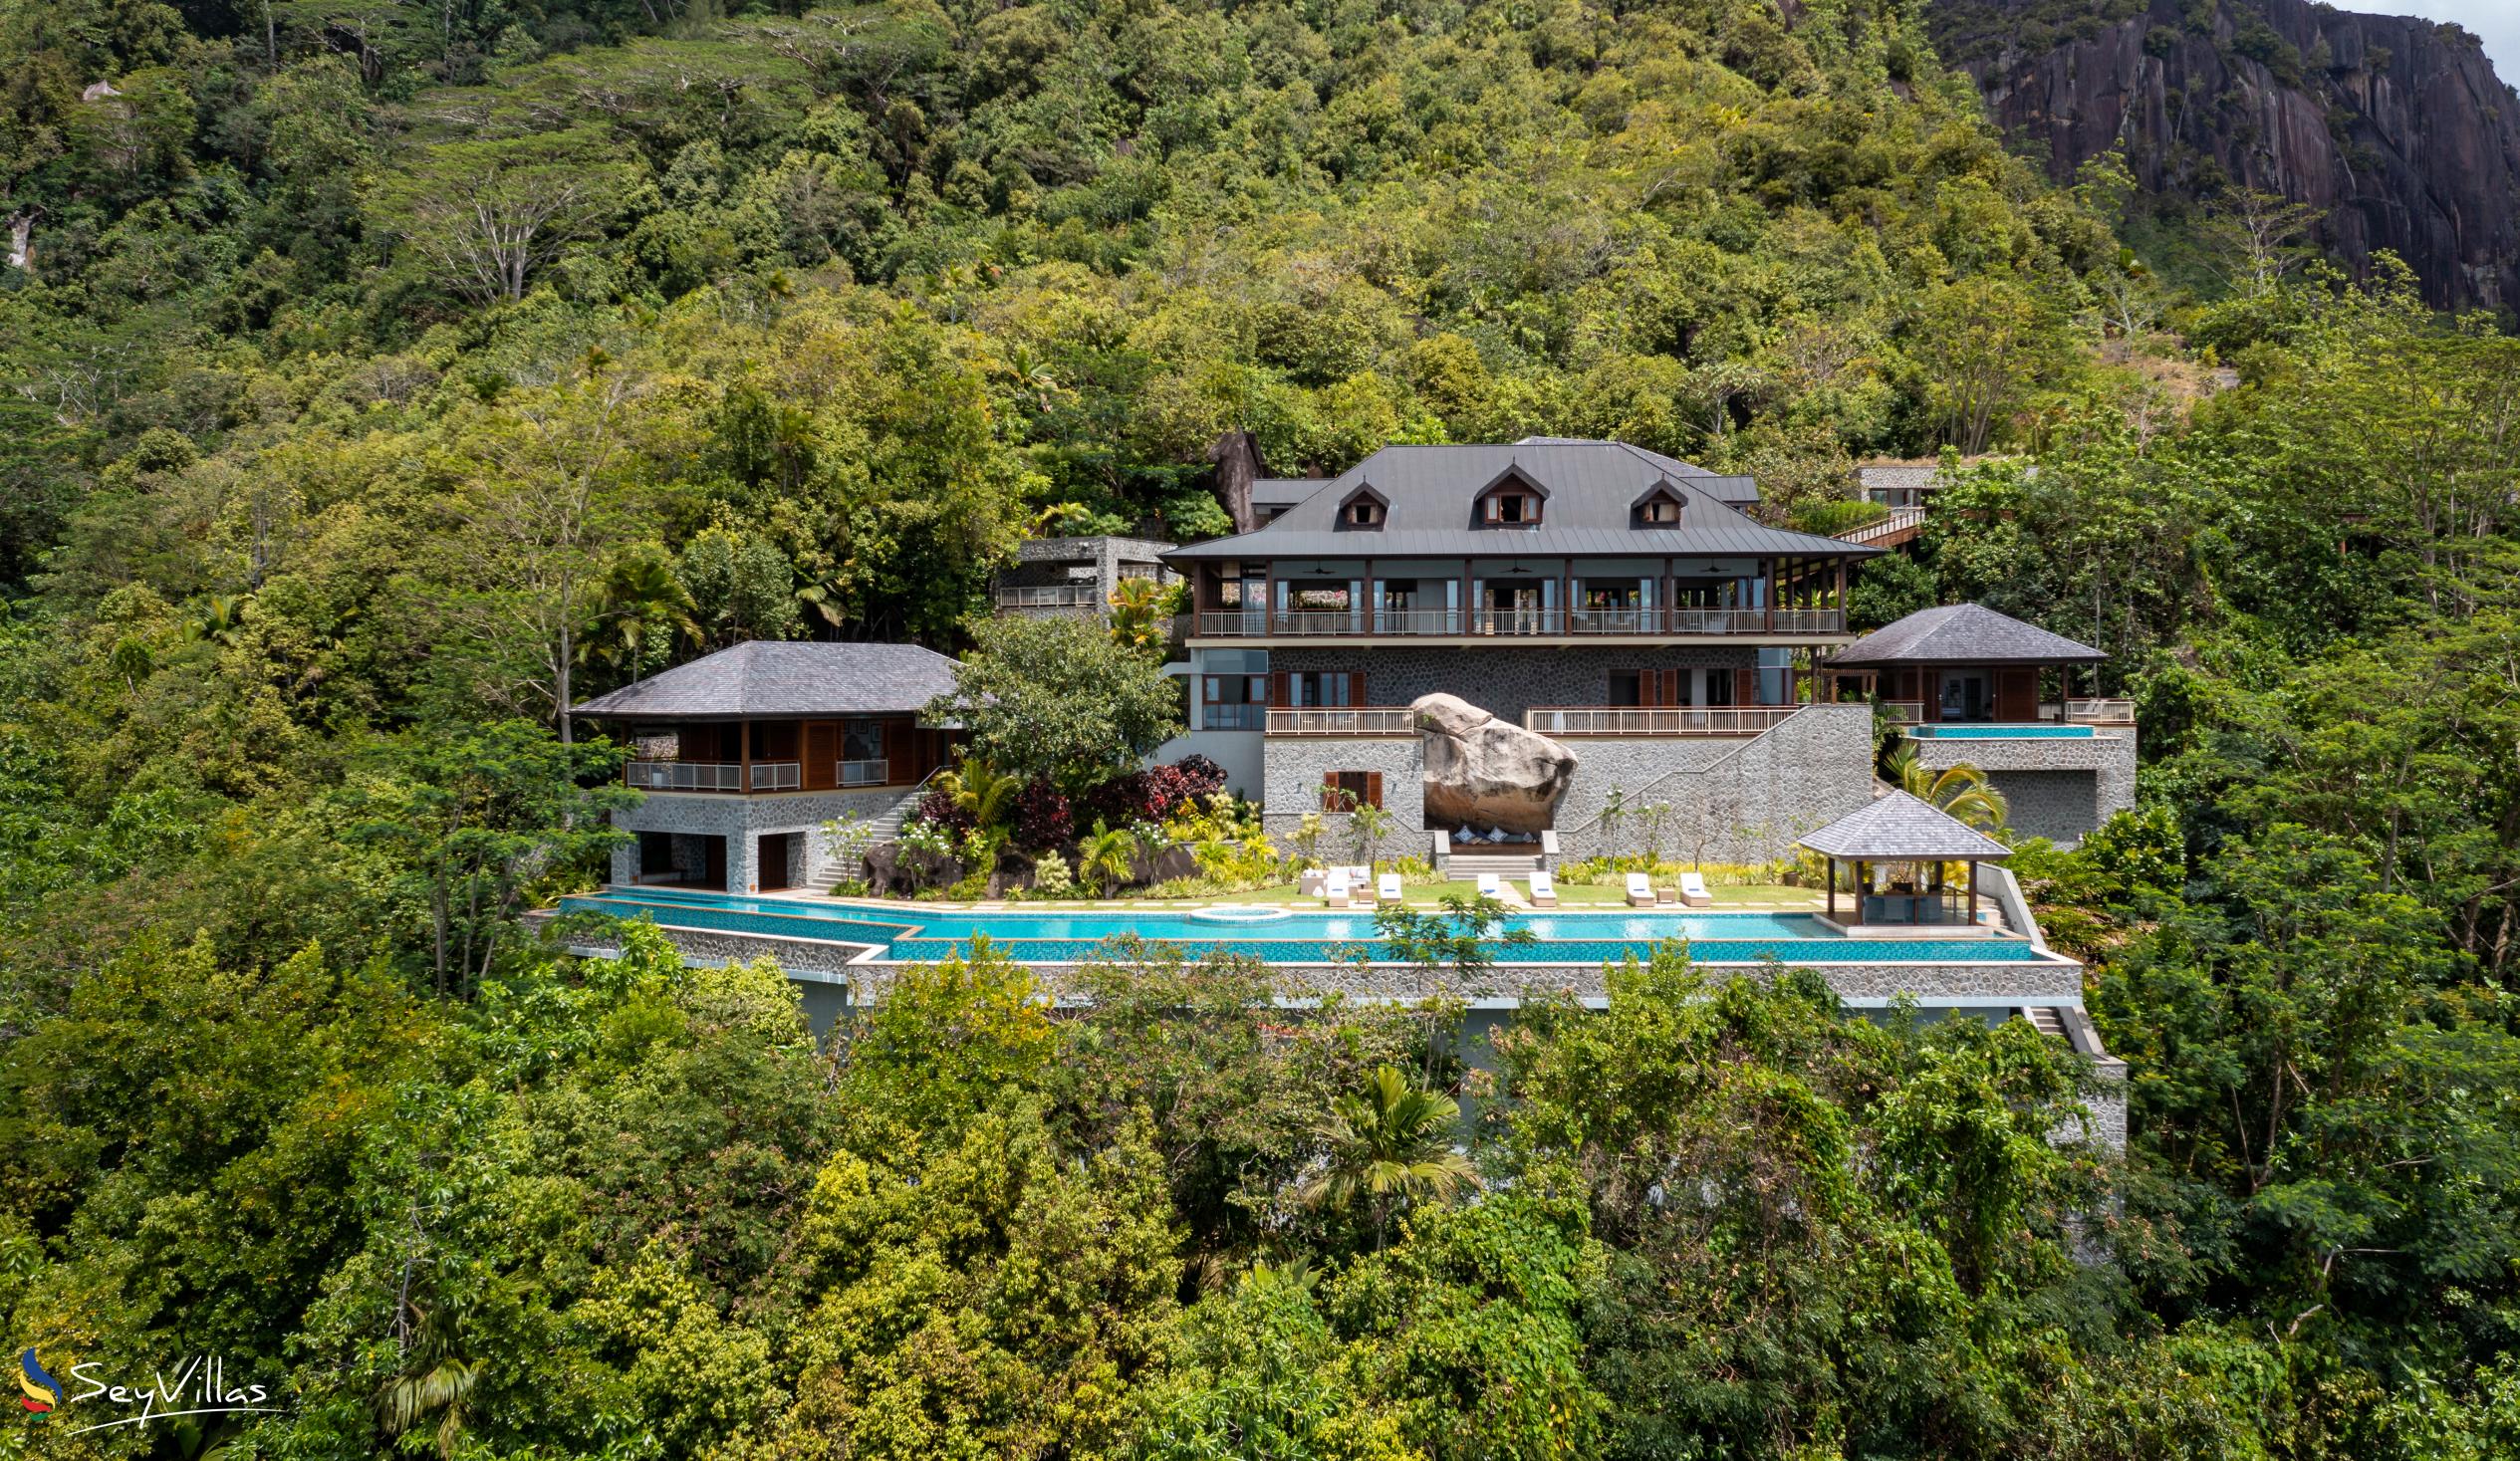 Photo 1: Villa Salazie - Outdoor area - Mahé (Seychelles)